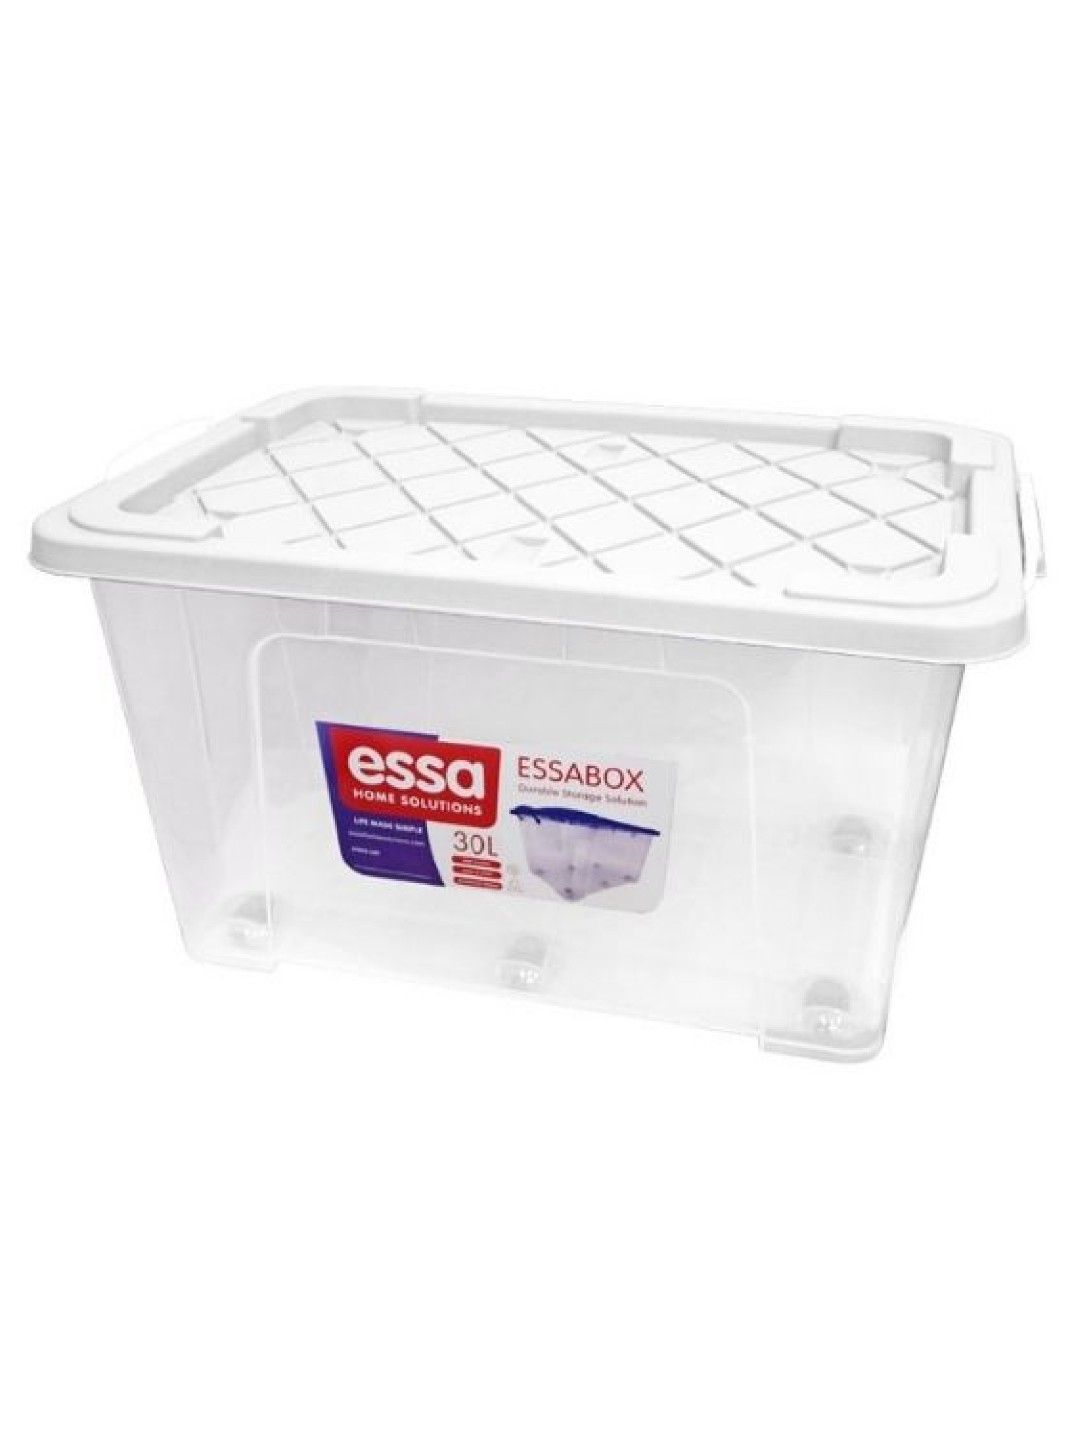 Essa Homes Solutions Storage Box (30L)